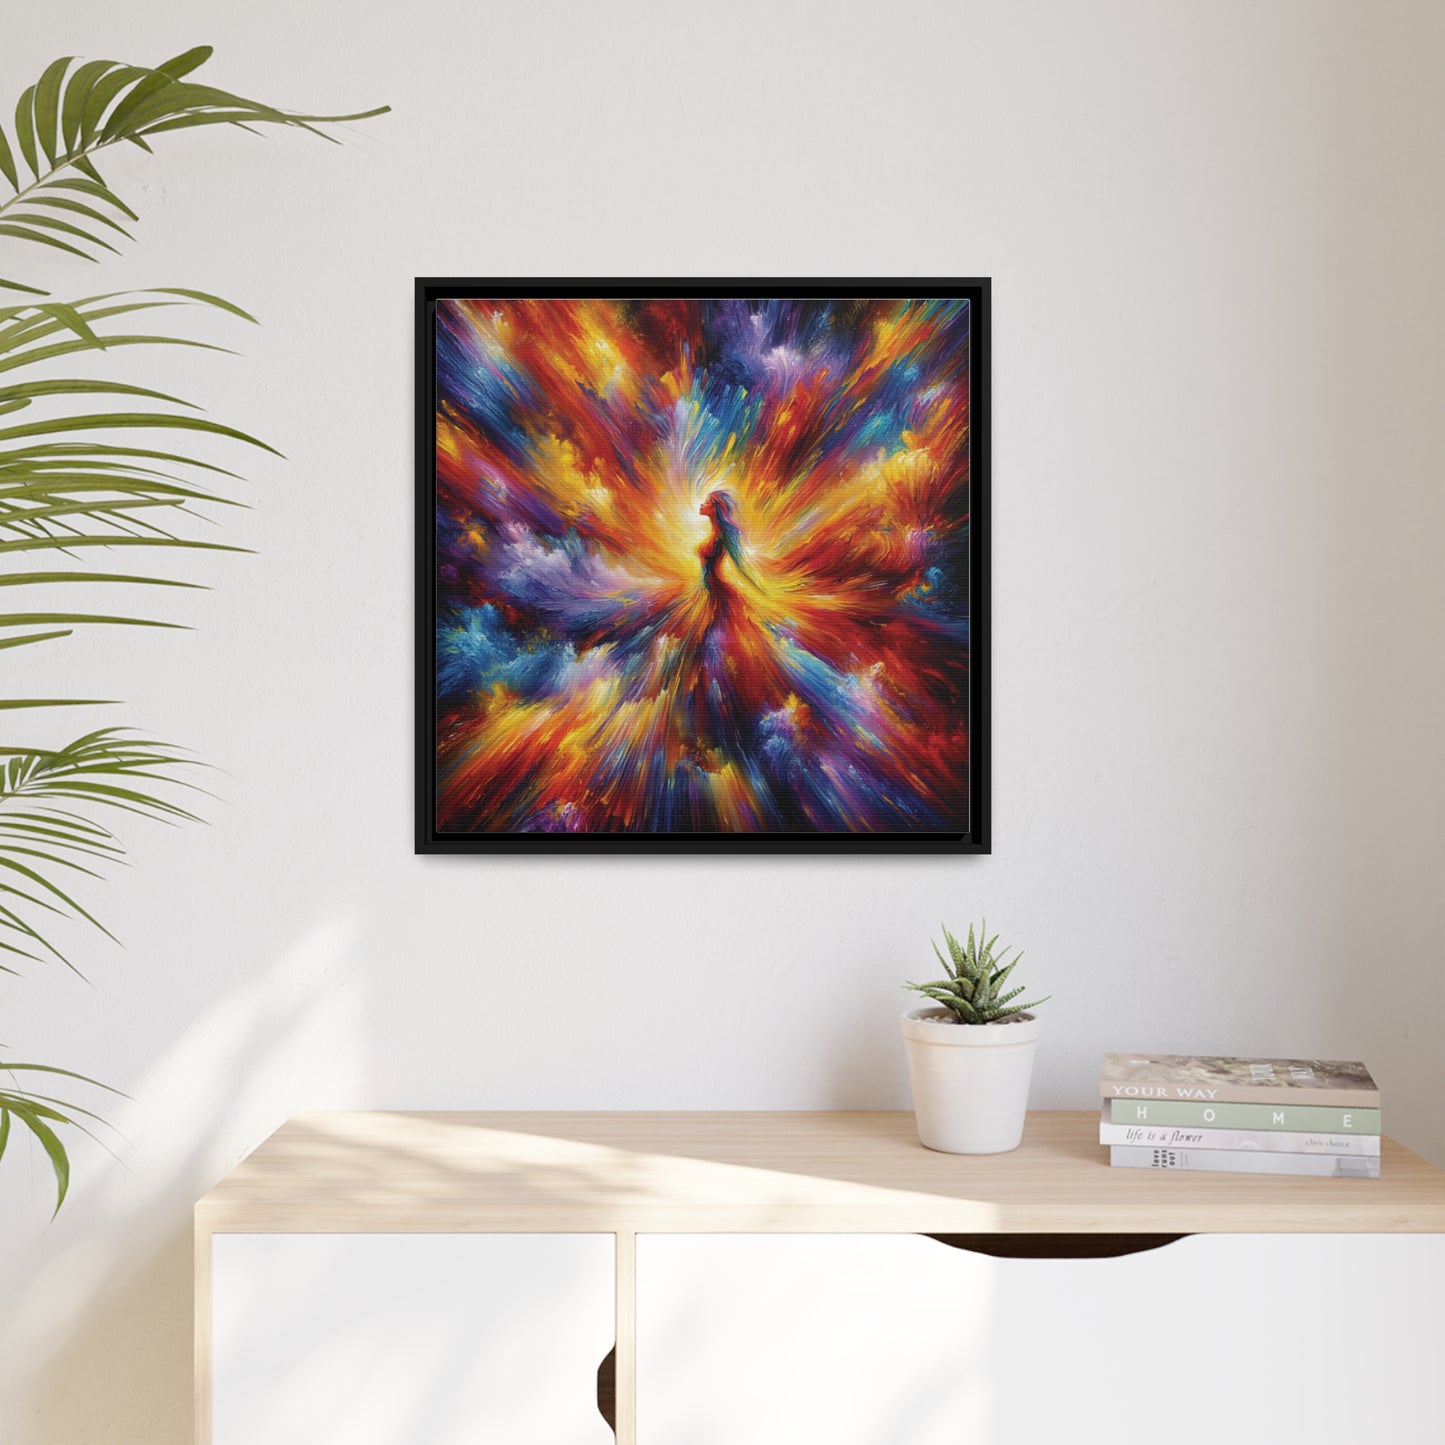 Blazing Spirit Wall Art Canvas | Abstract Energy Art | Canvas Print | Modern Wall Decor